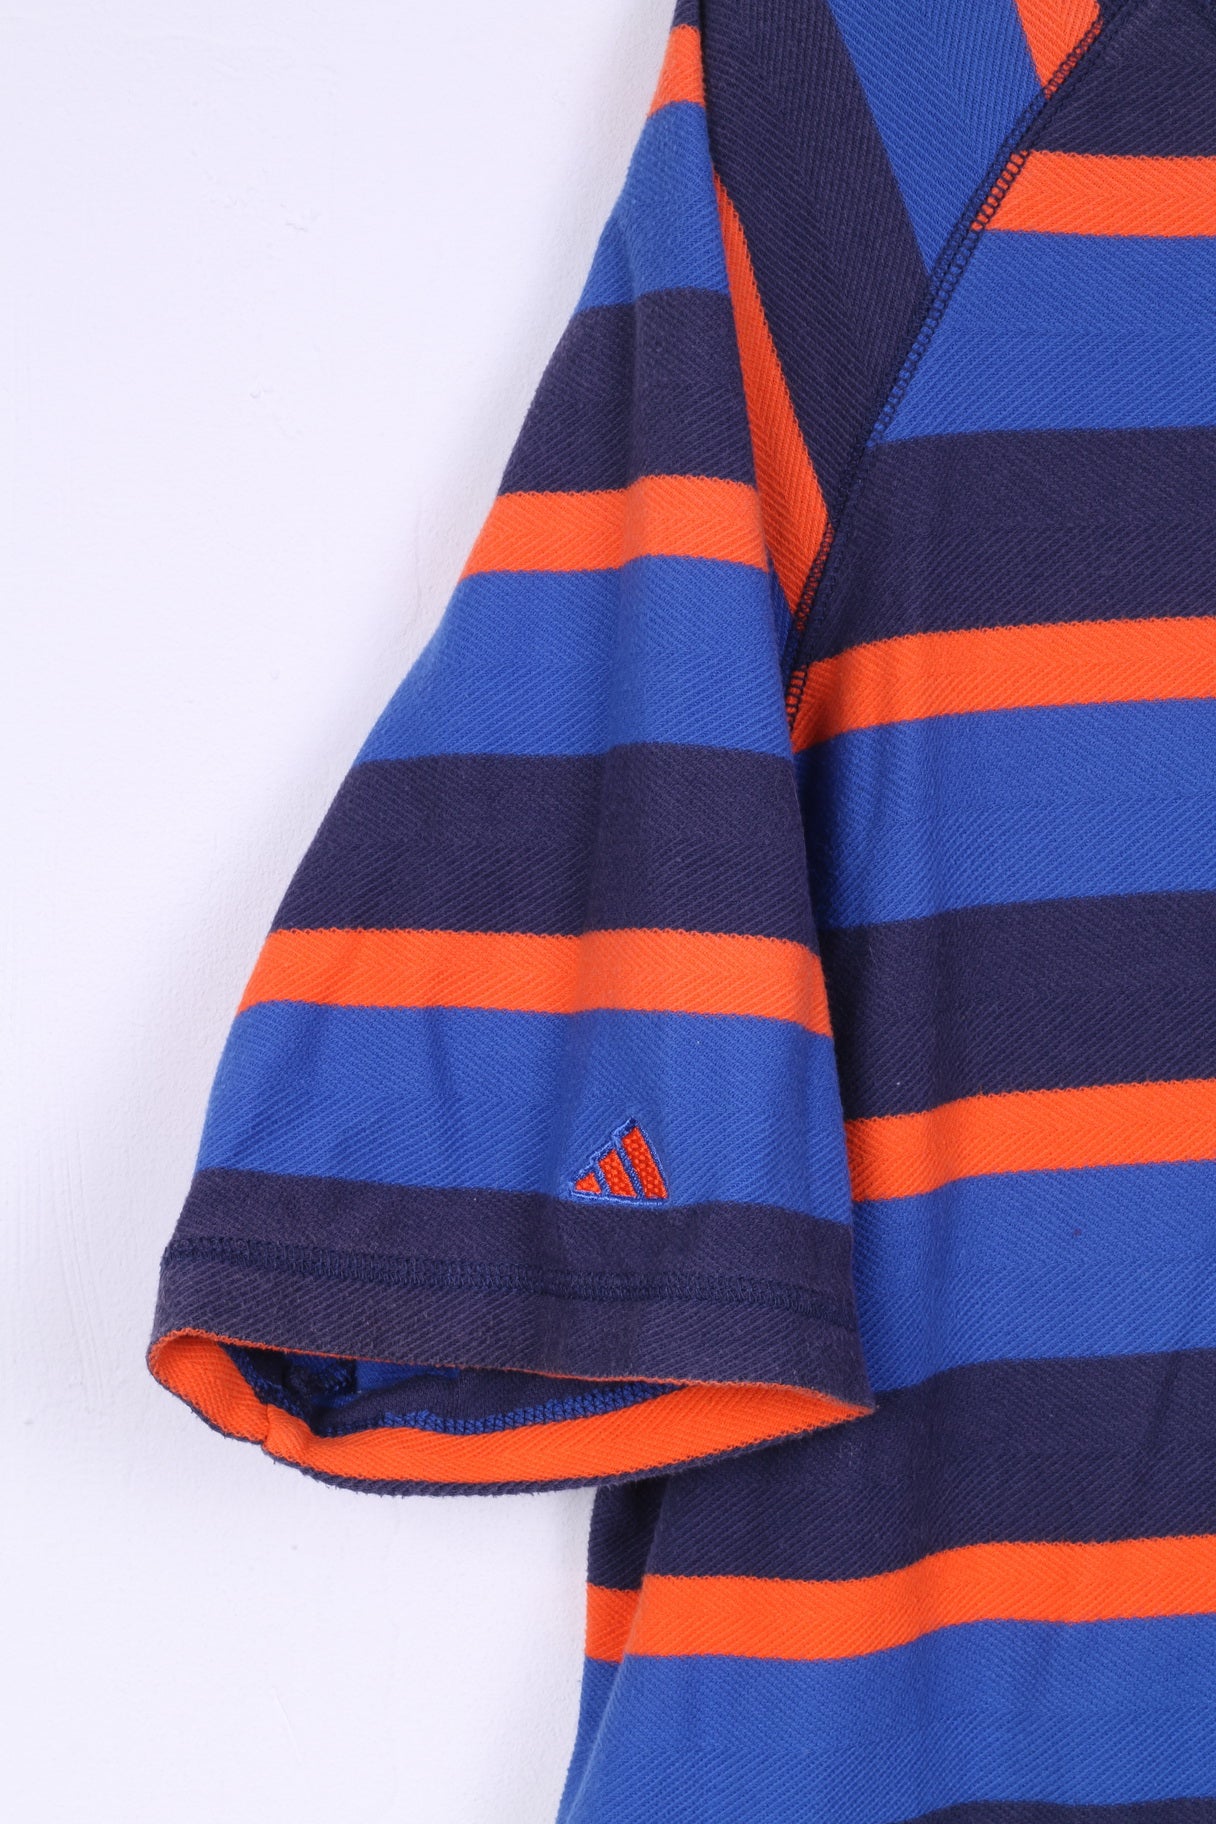 Polo Adidas da uomo L, vintage estivo, in cotone a righe blu navy, a righe